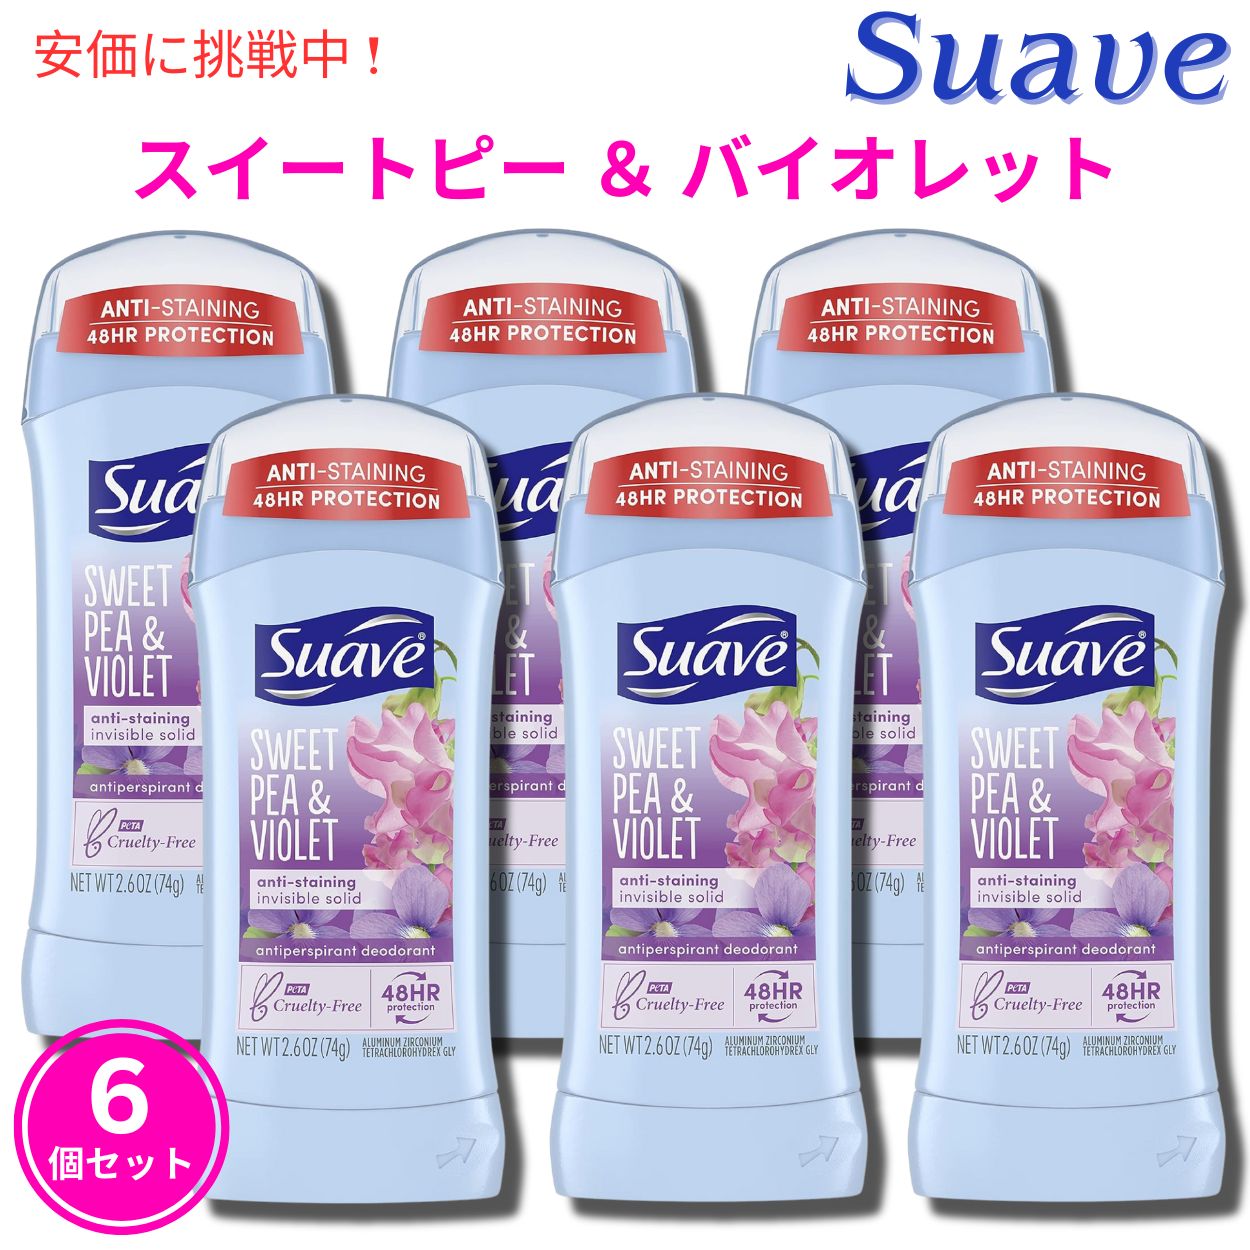 Sweetpea Violet Suave スアーブ デオドラント スイートピー バイオレット 74g スティック状 6個セット Deodorant Stick Set of 6